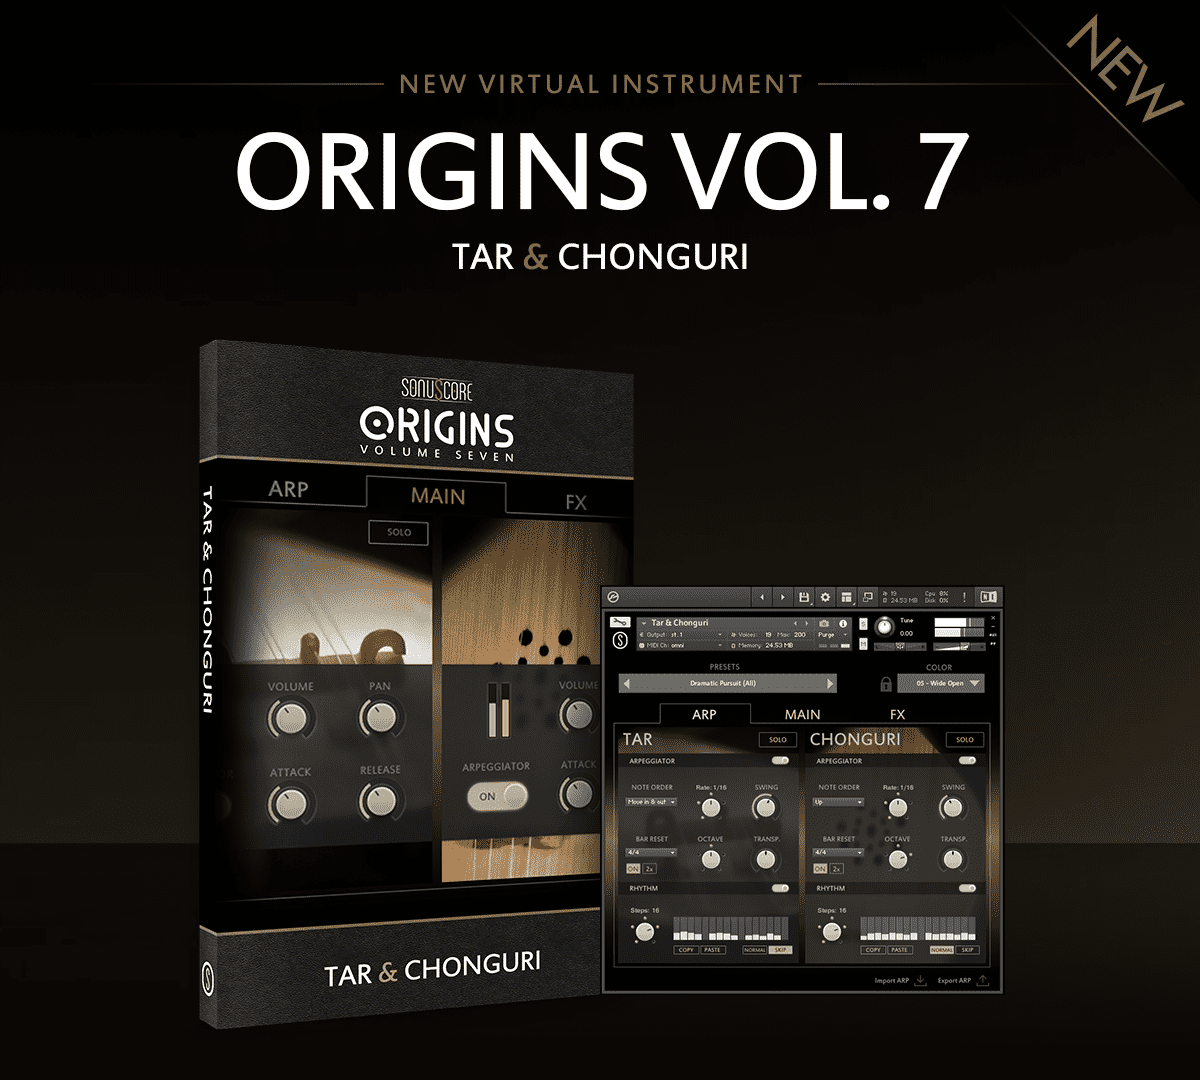 Sonuscore Release – Origins Vol. 7: Tar & Chonguri